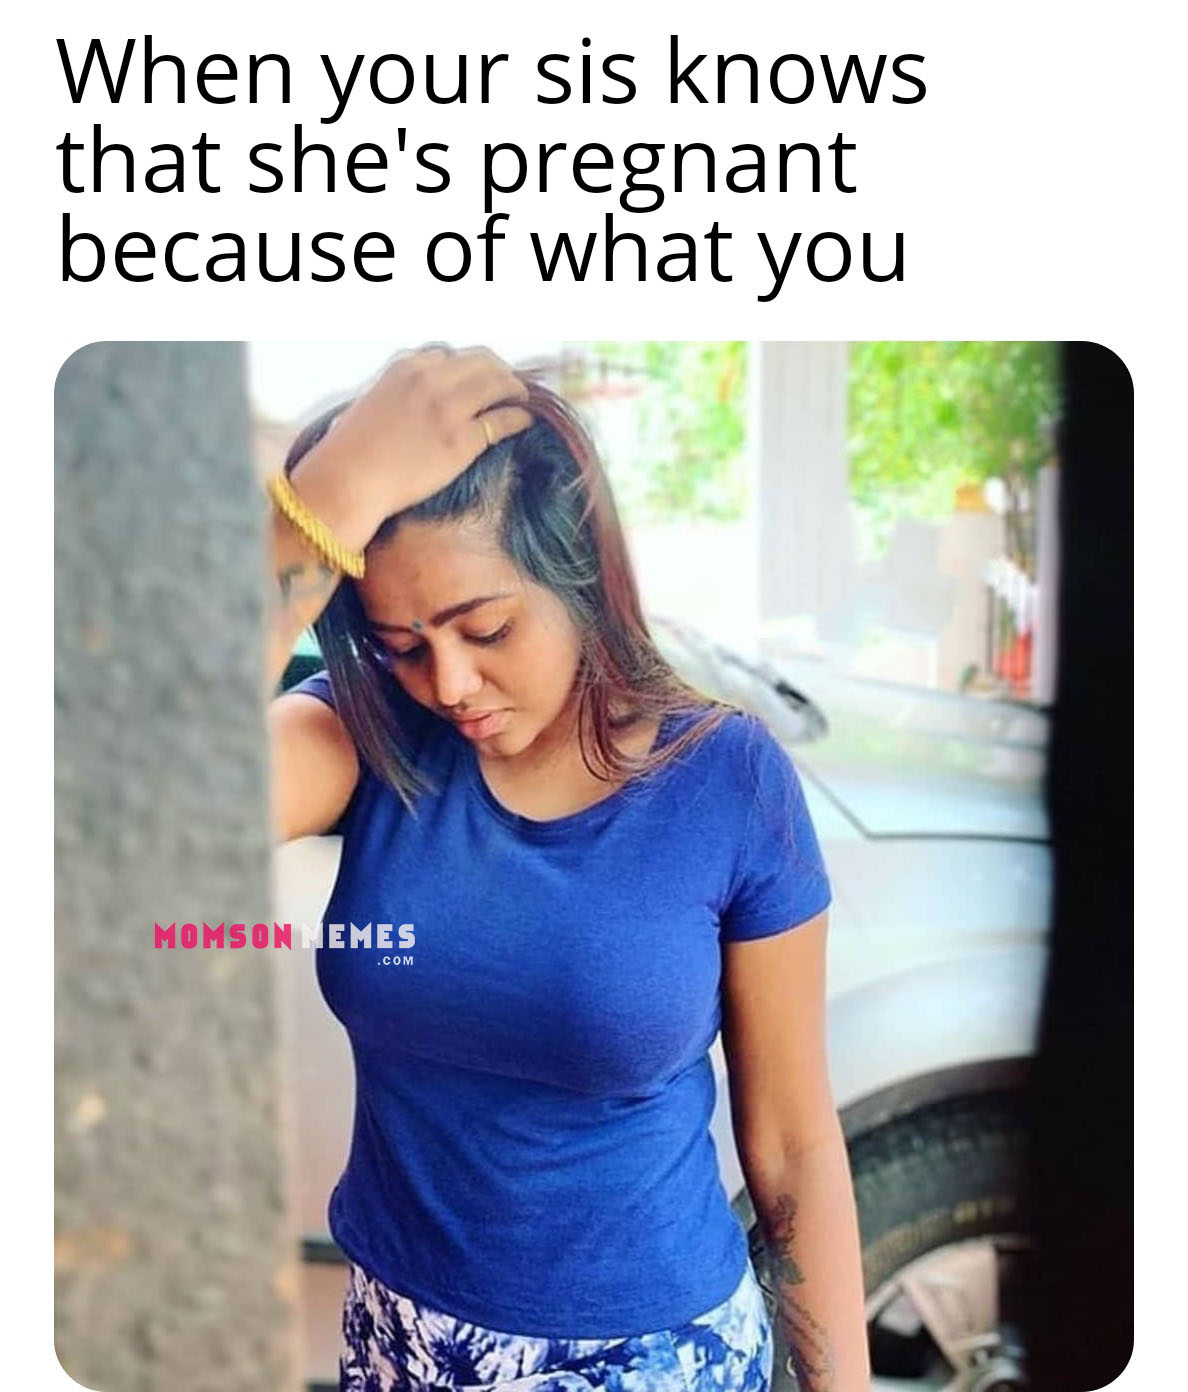 She’s pregnant!